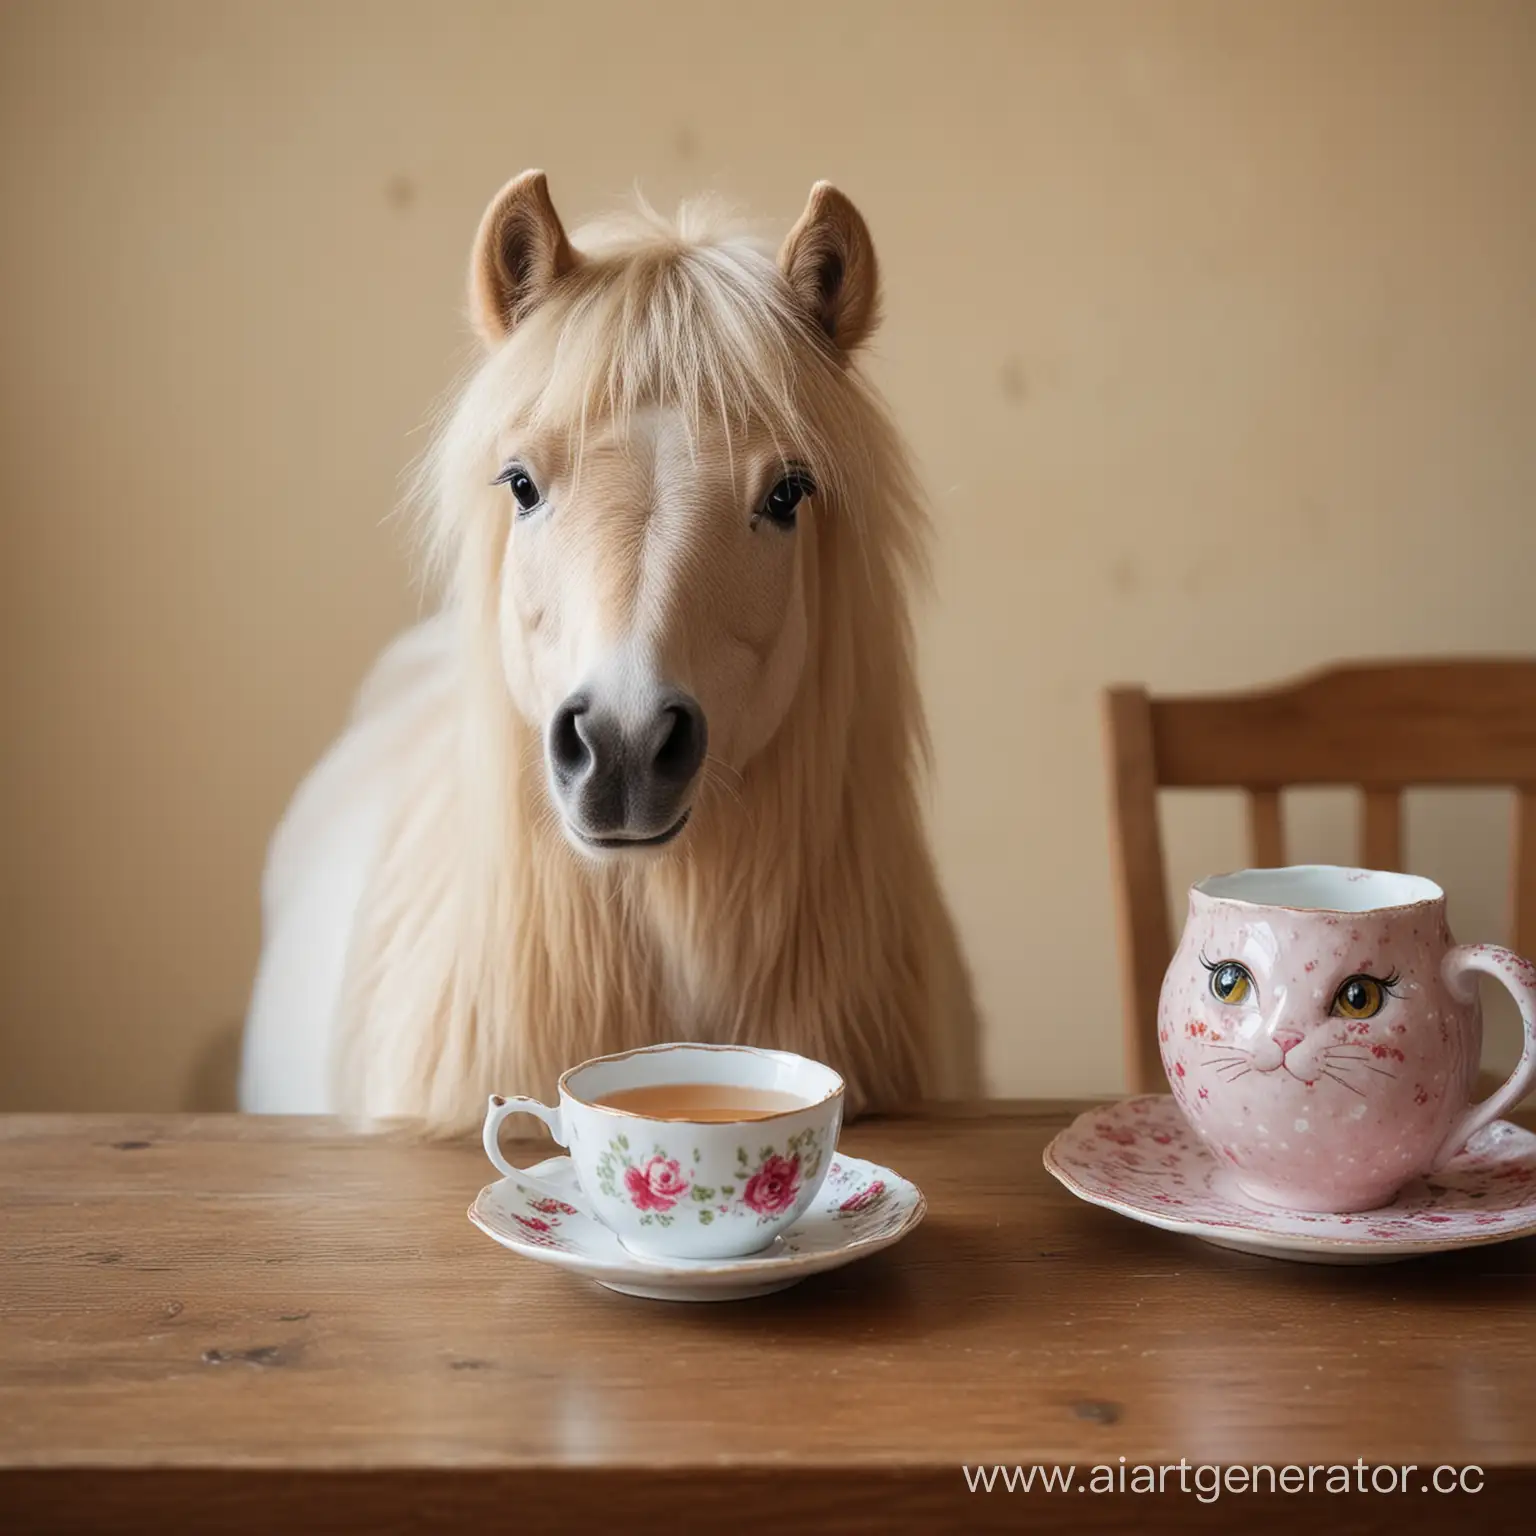 CatFaced-Pony-Enjoying-Tea-on-a-Table